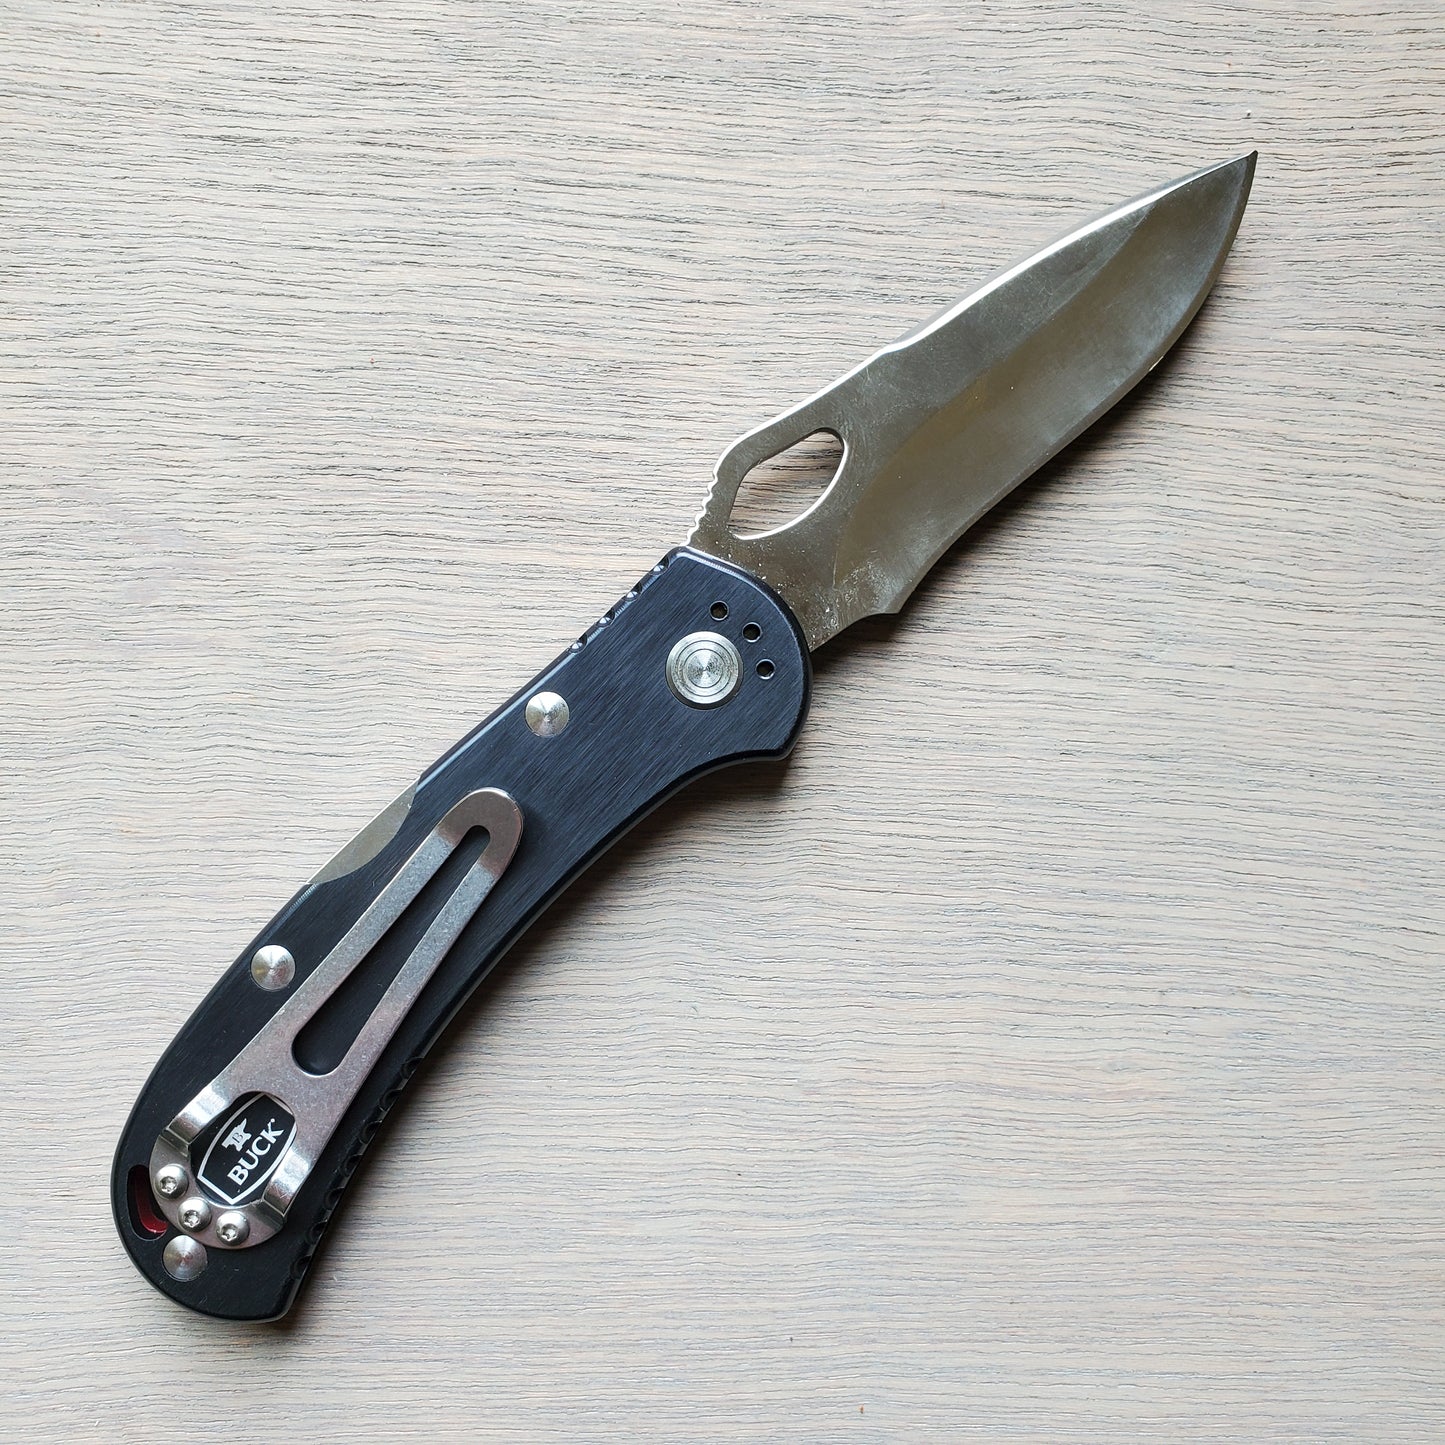 Buck 722 Spitfire Lockback 3.25" Pocket Knife - Black